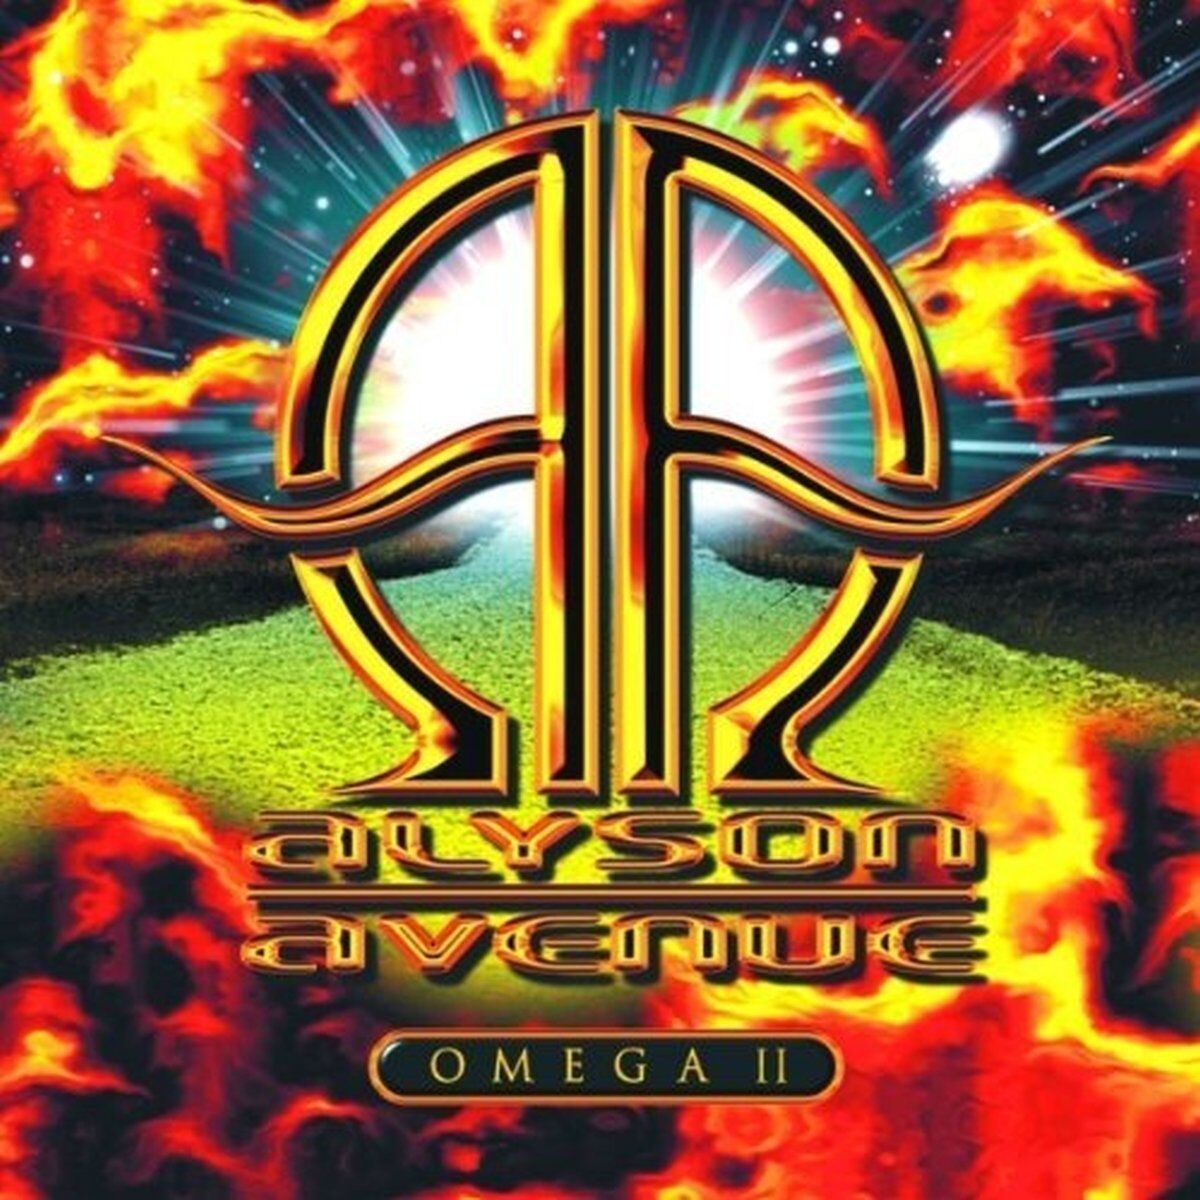 Alyson Avenue - Omega II CD 2009 feat. Anette Olzon Nightwish 5 Bonus Tracks